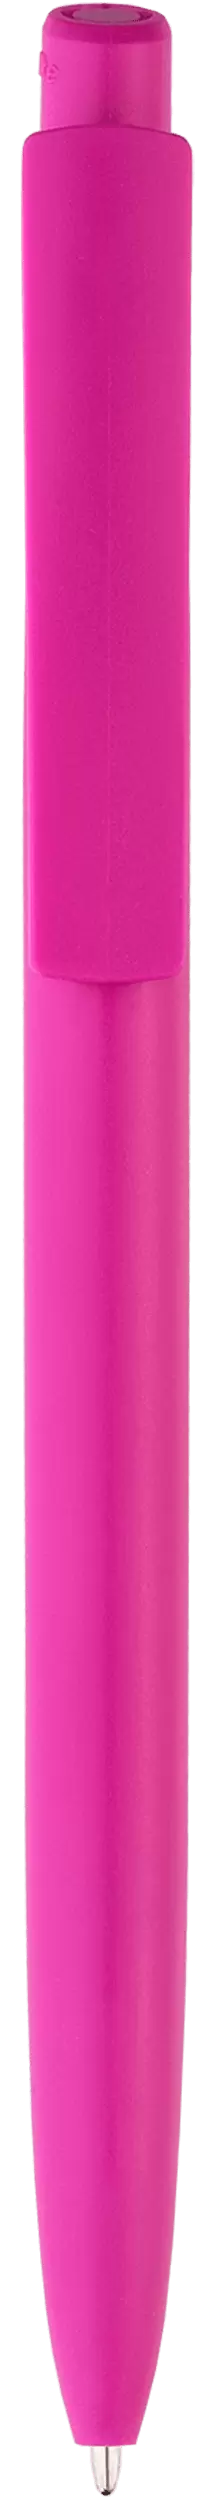 Ручка POLO COLOR Розовая 1303-10